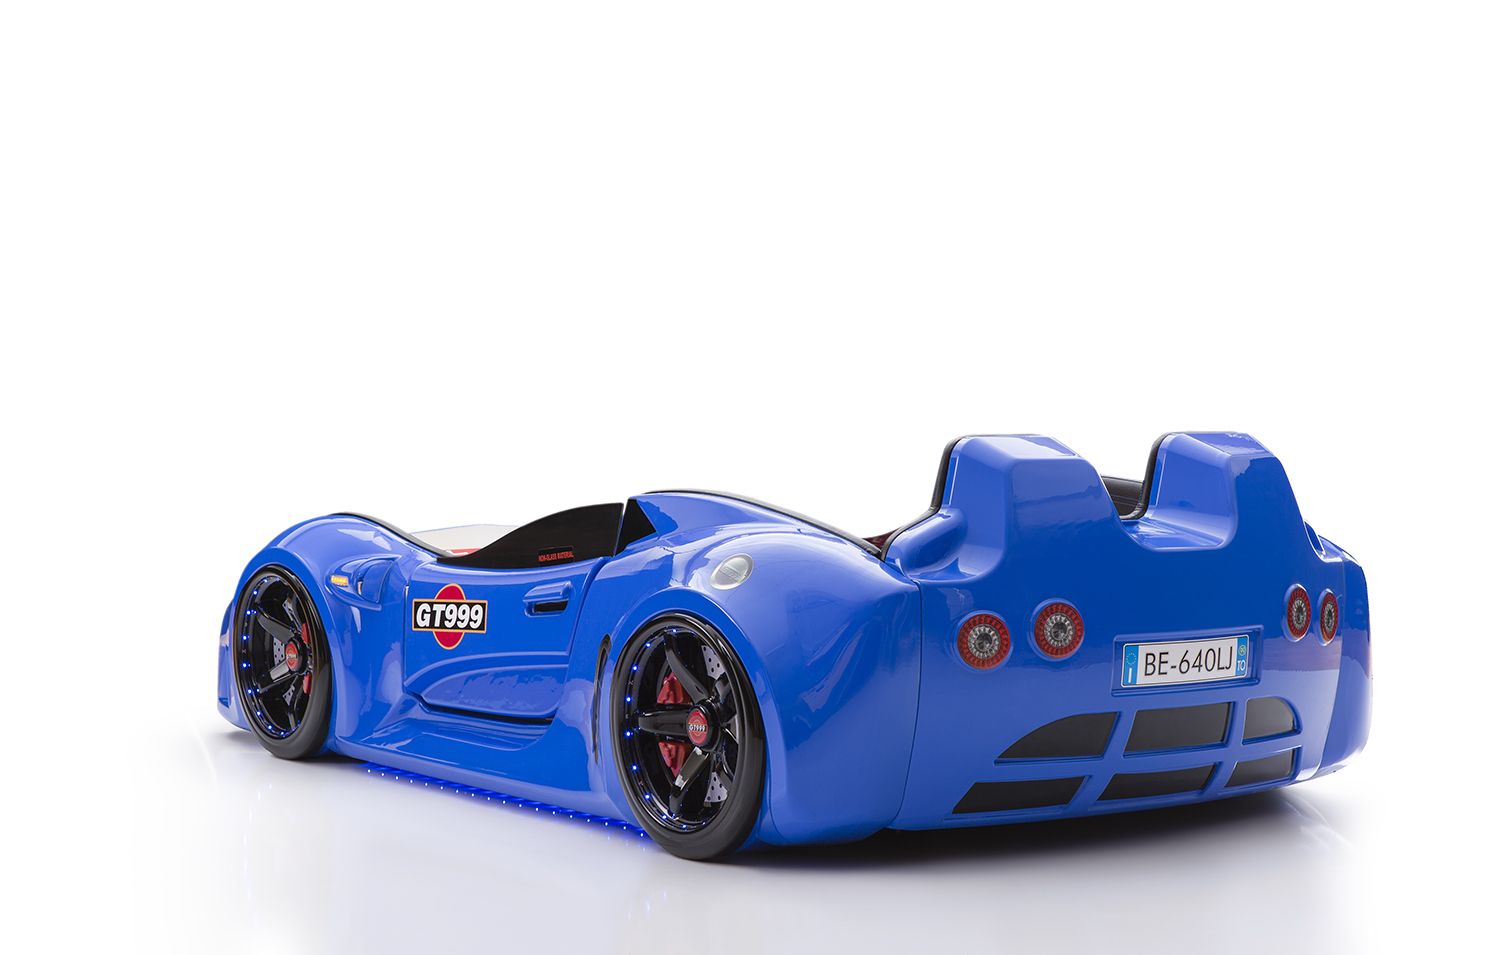 Autobett GTE-999 in Blau